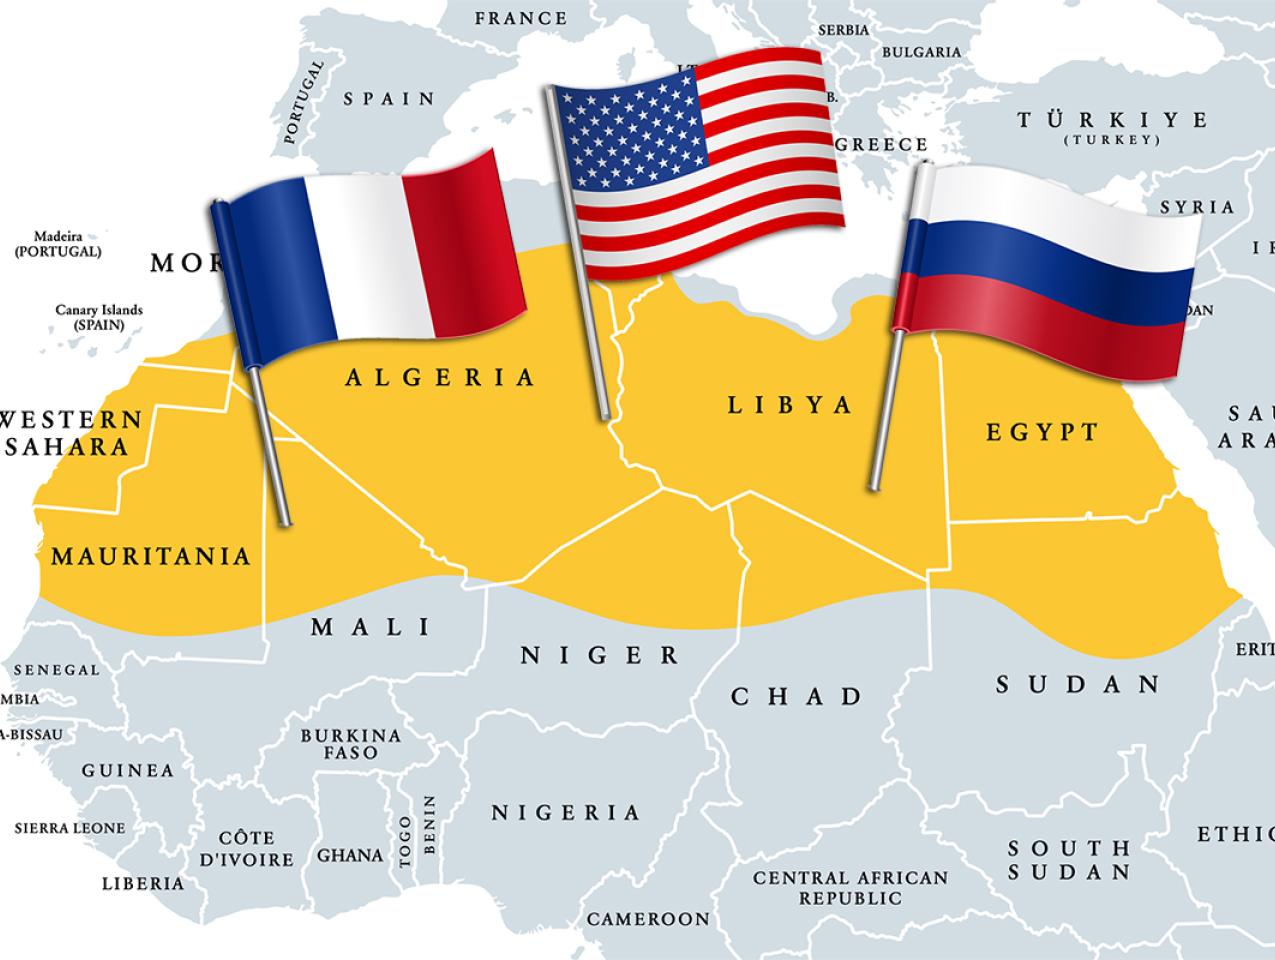 US France Russia in Sahel